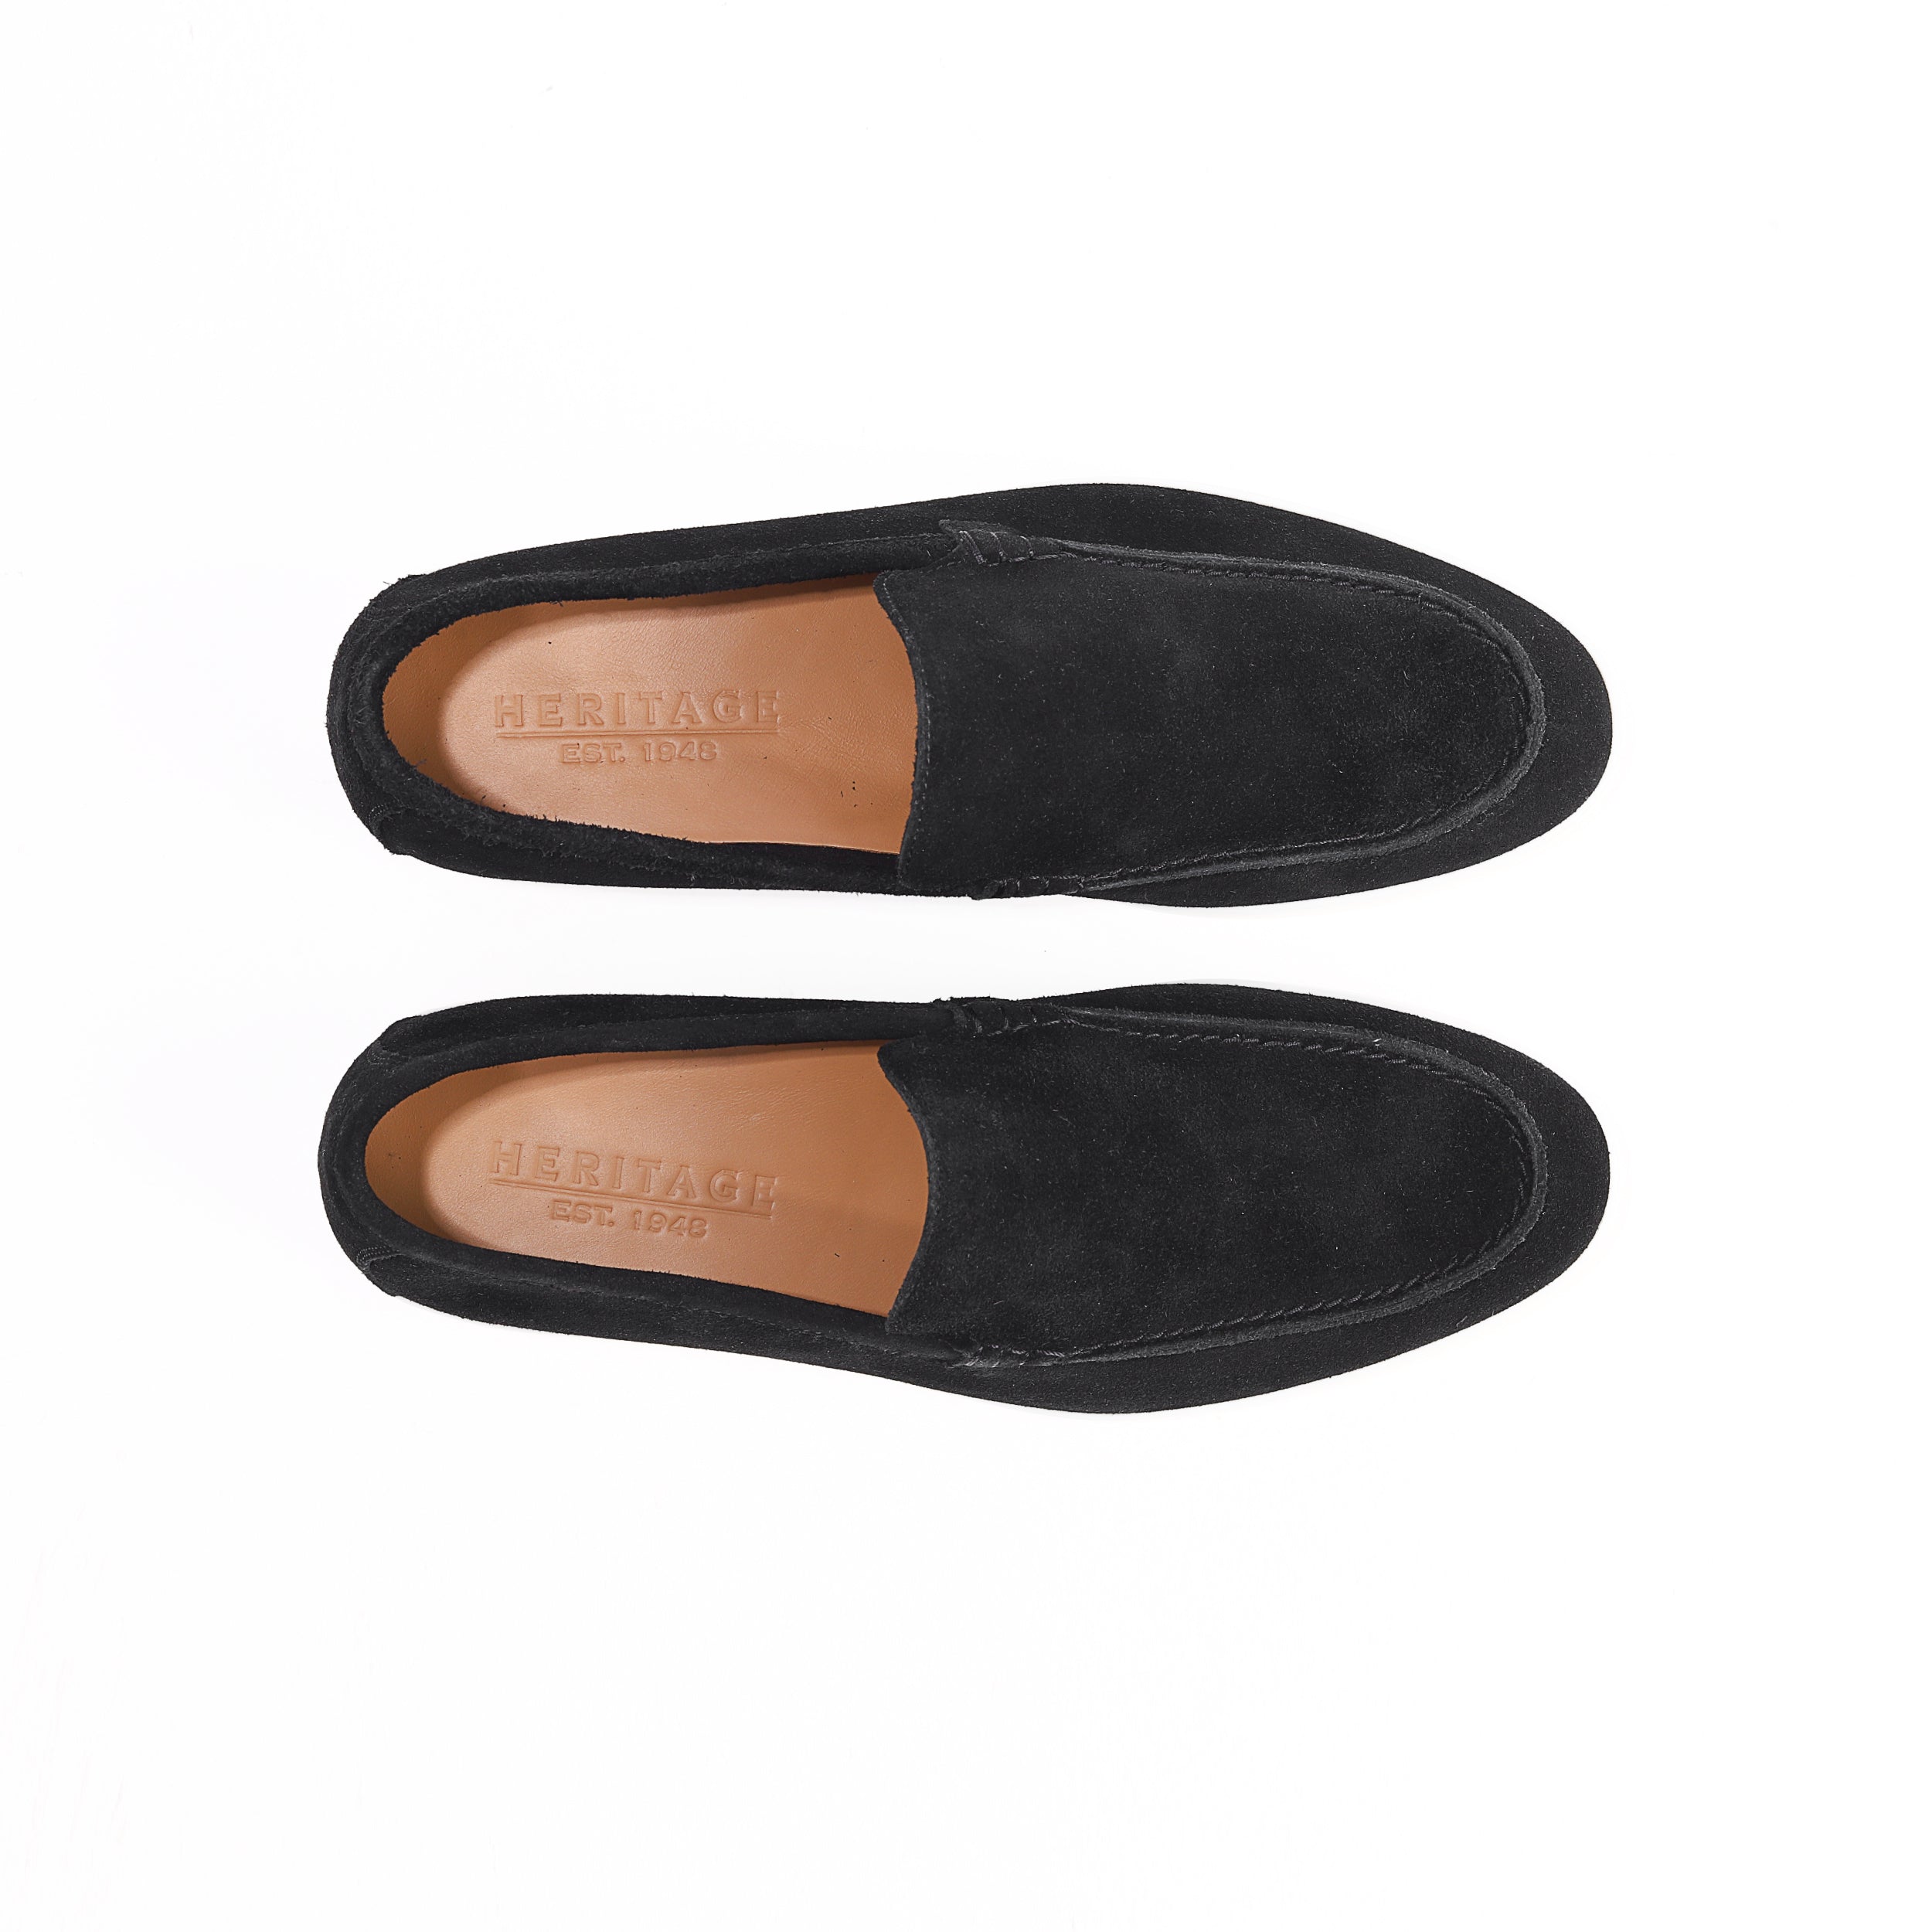 Heritage Suede Flat Loafers For Men Black